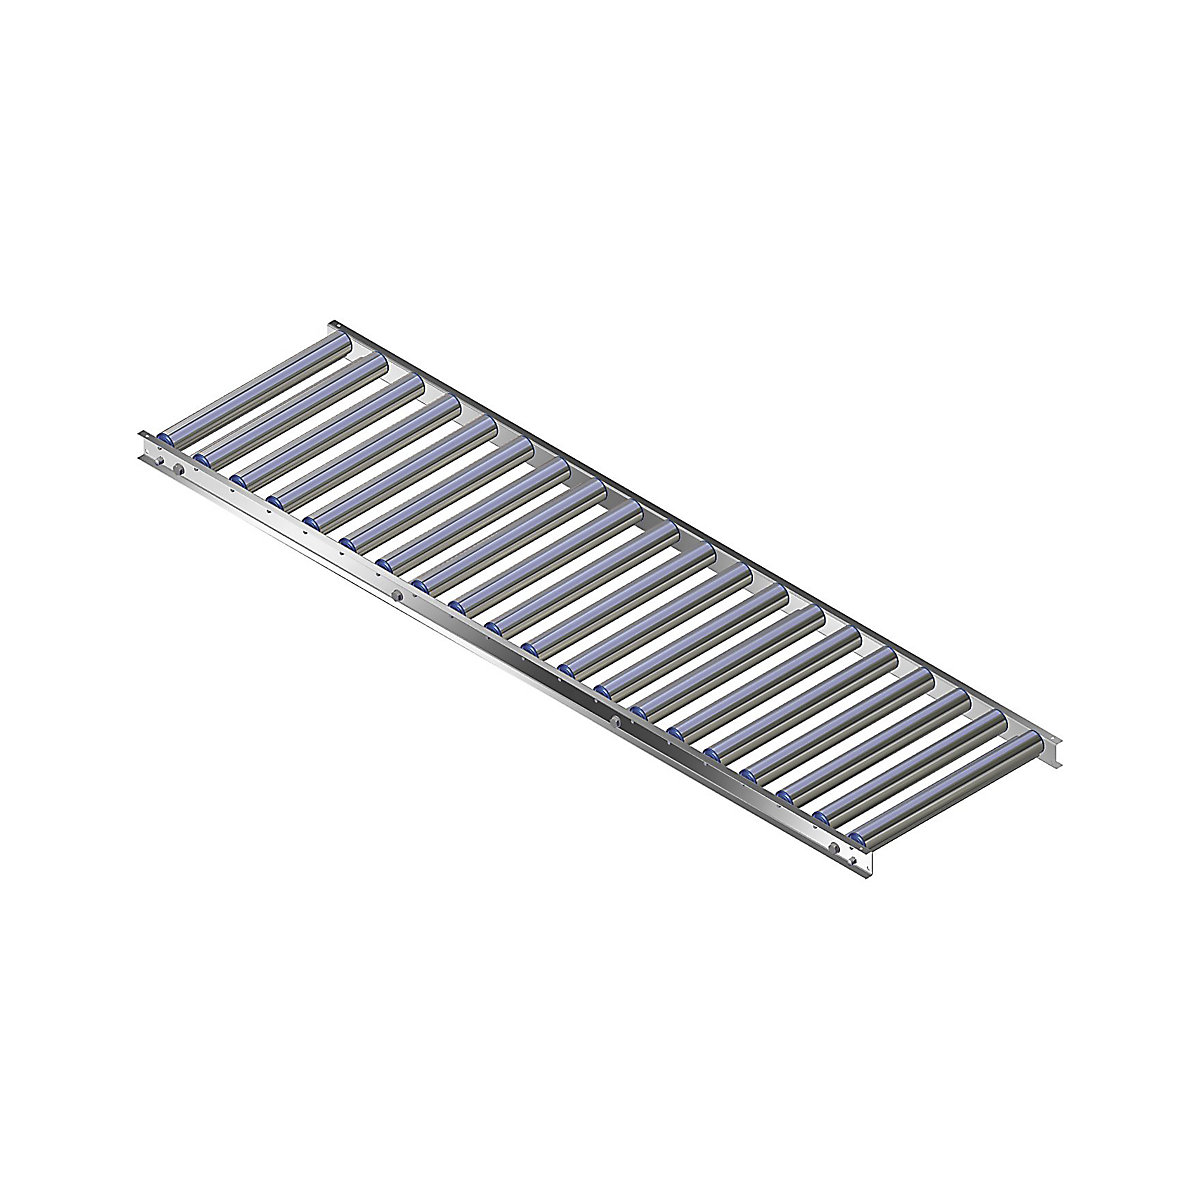 Gura – Light duty roller conveyor, aluminium frame with aluminium rollers, track width 500 mm, axle spacing 100 mm, length 2.0 m